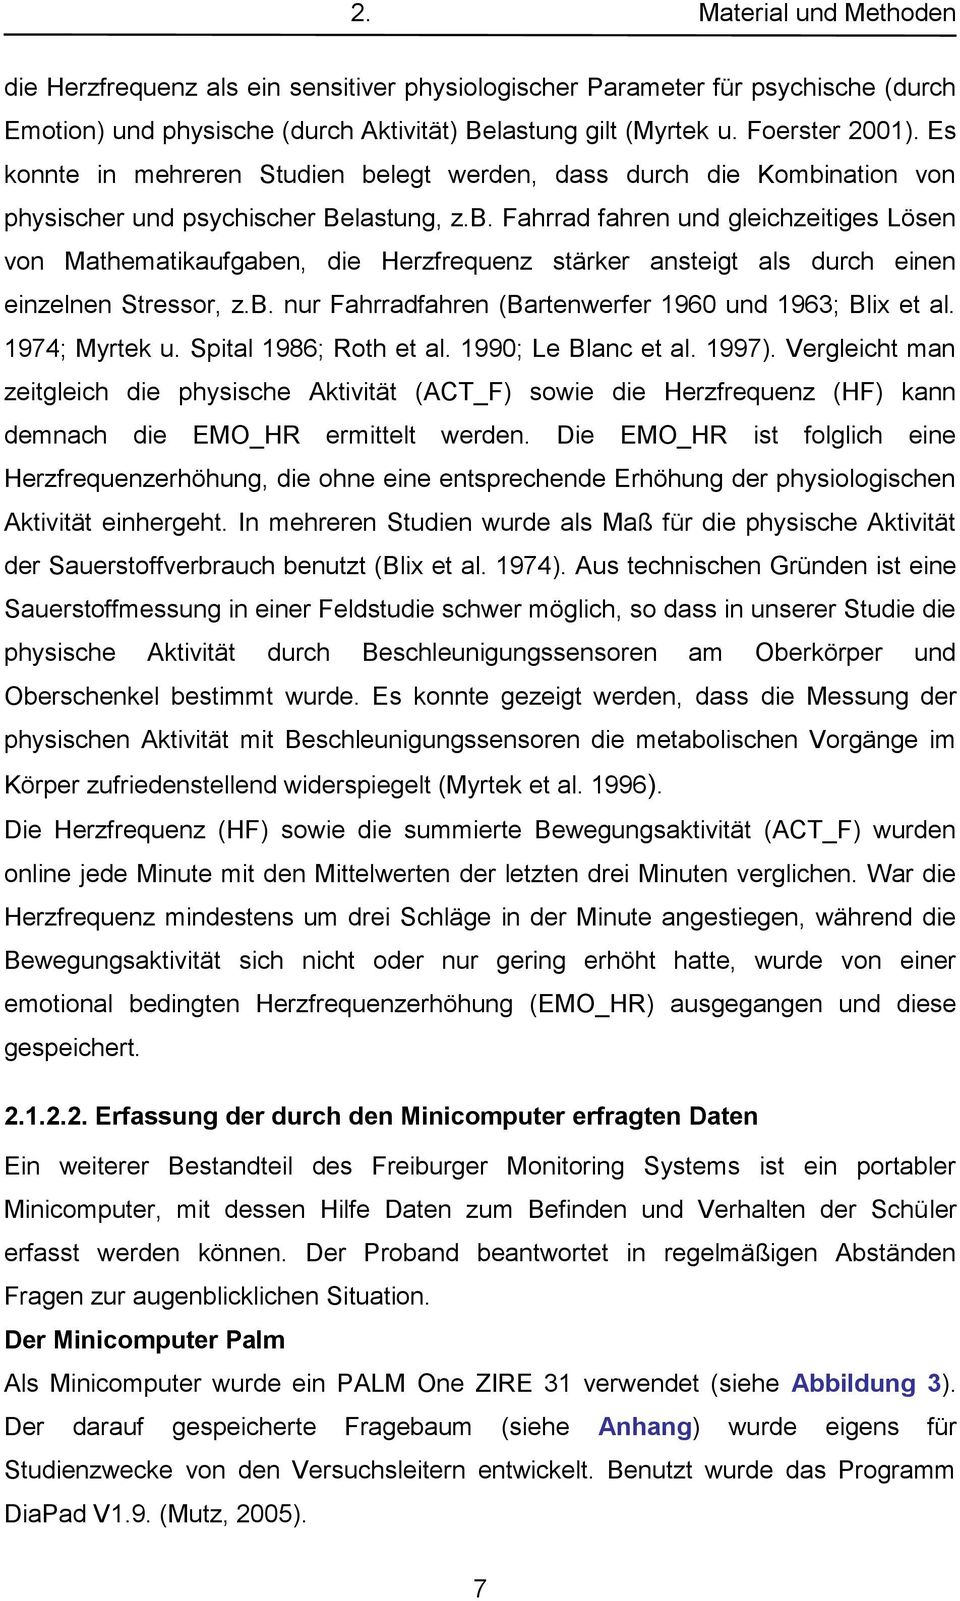 b. nur Fahrradfahren (Bartenwerfer 1960 und 1963; Blix et al. 1974; Myrtek u. Spital 1986; Roth et al. 1990; Le Blanc et al. 1997).